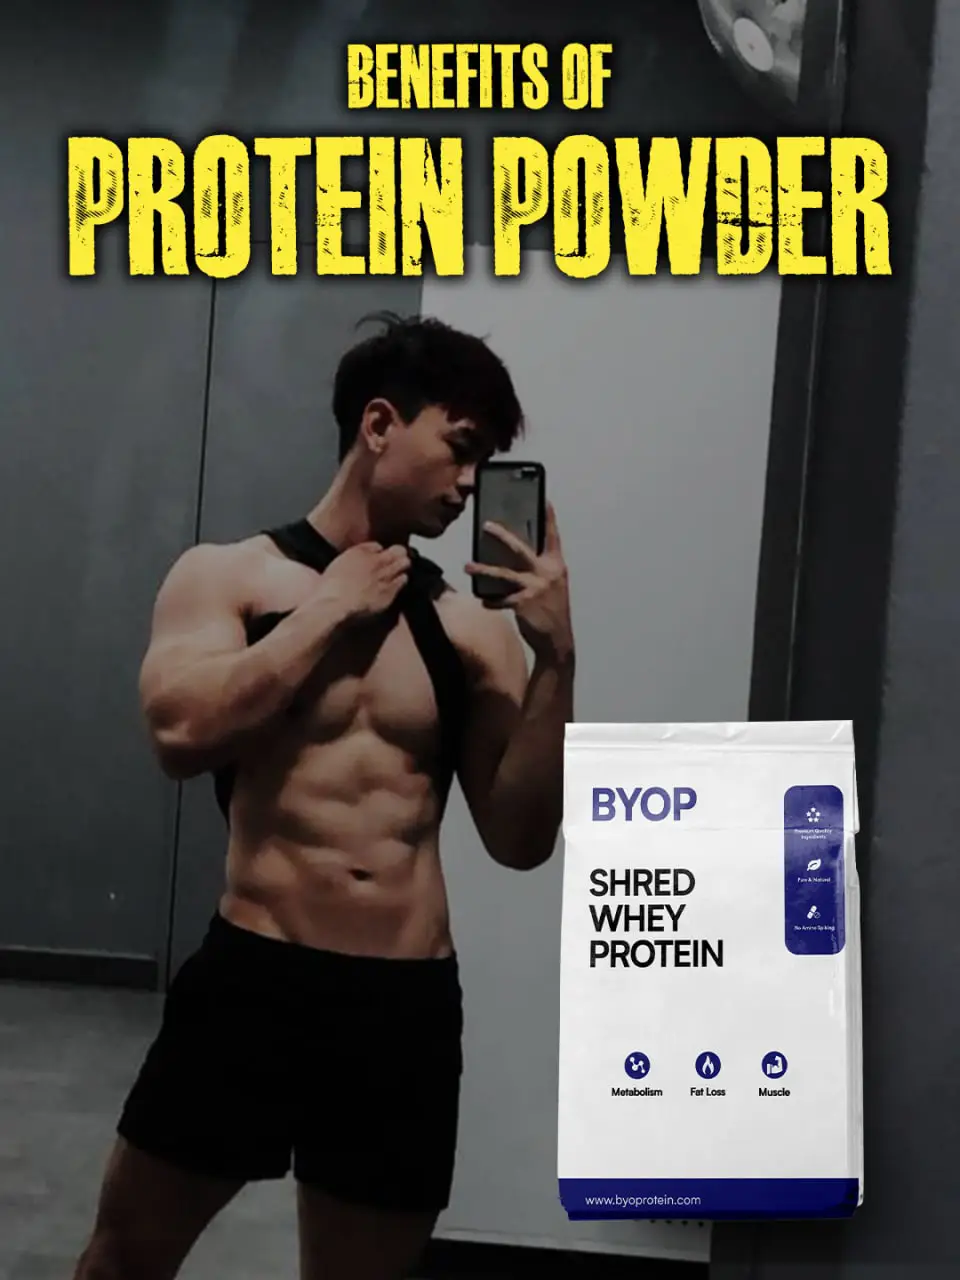 Gym Rat Protein, Mini Protein Powder Container, Protein Powder